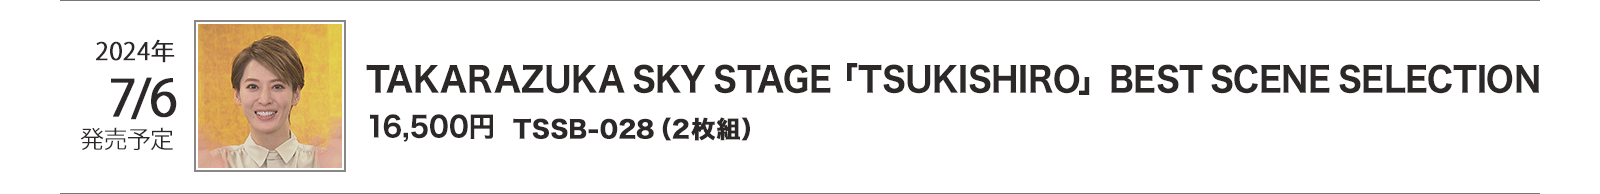 2024N7\/TSSB-028i2gj/TAKARAZUKA SKY STAGE TSUKISHIRO  BEST SCENE SELECTION/16,500~